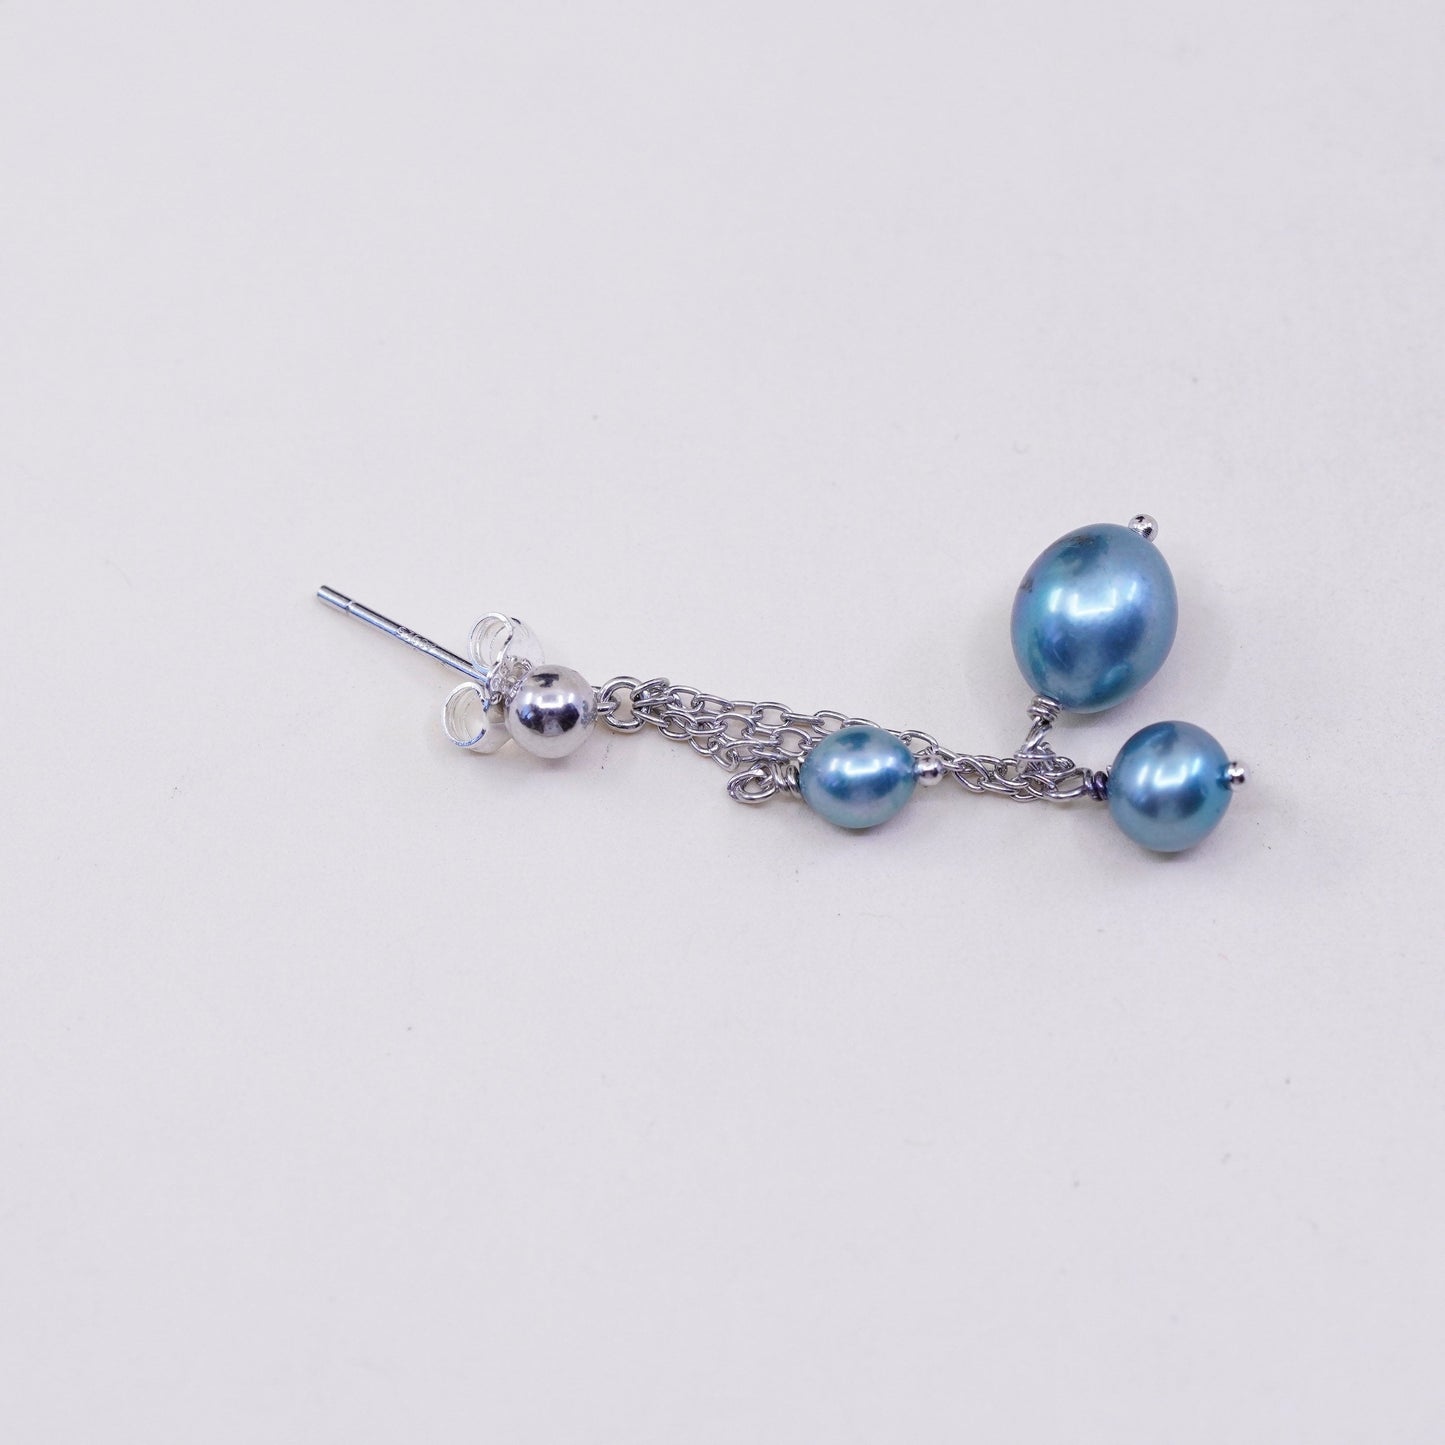 Vintage sterling 925 silver handmade earrings with fringe pearl dangles